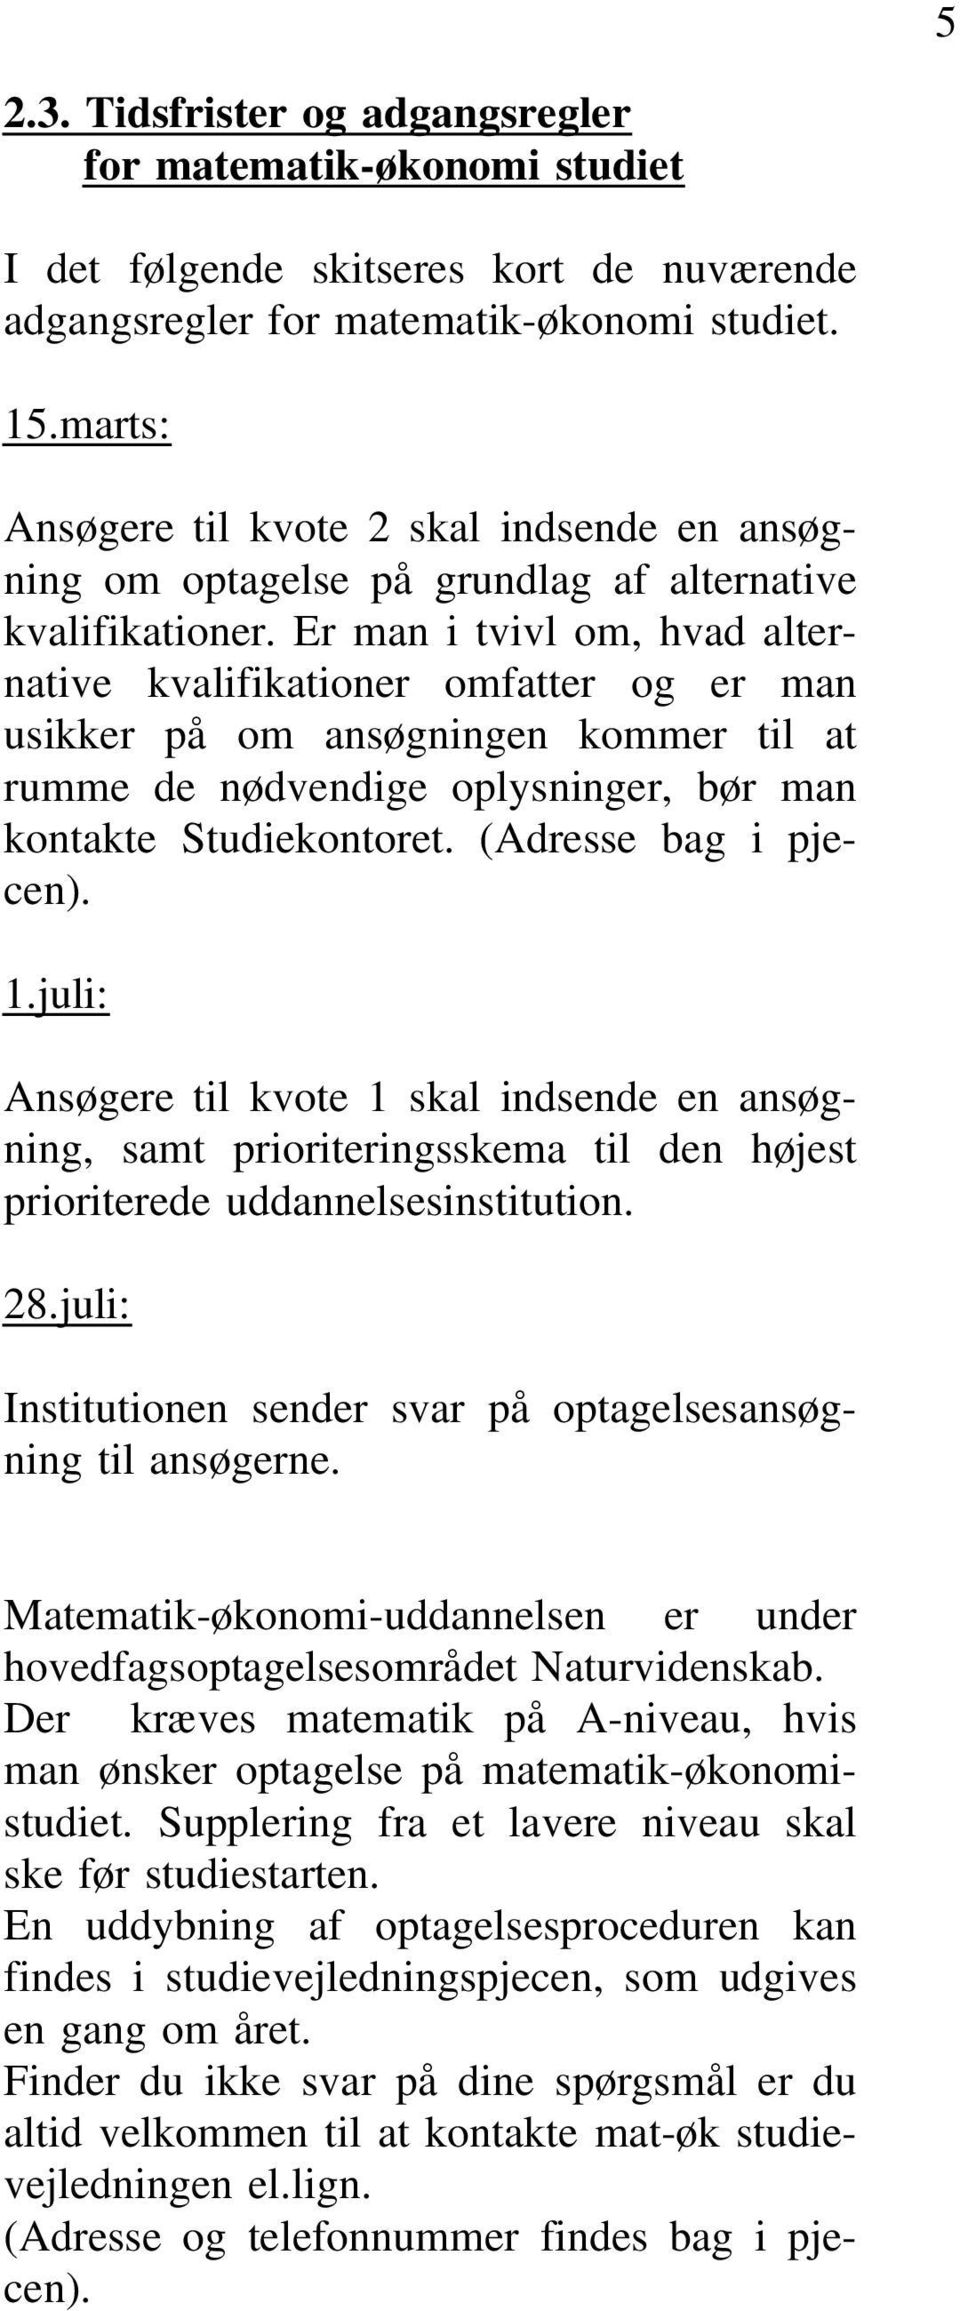 MATEMATIK-ØKONOMI STUDIET VED AARHUS UNIVERSITET - PDF Gratis download